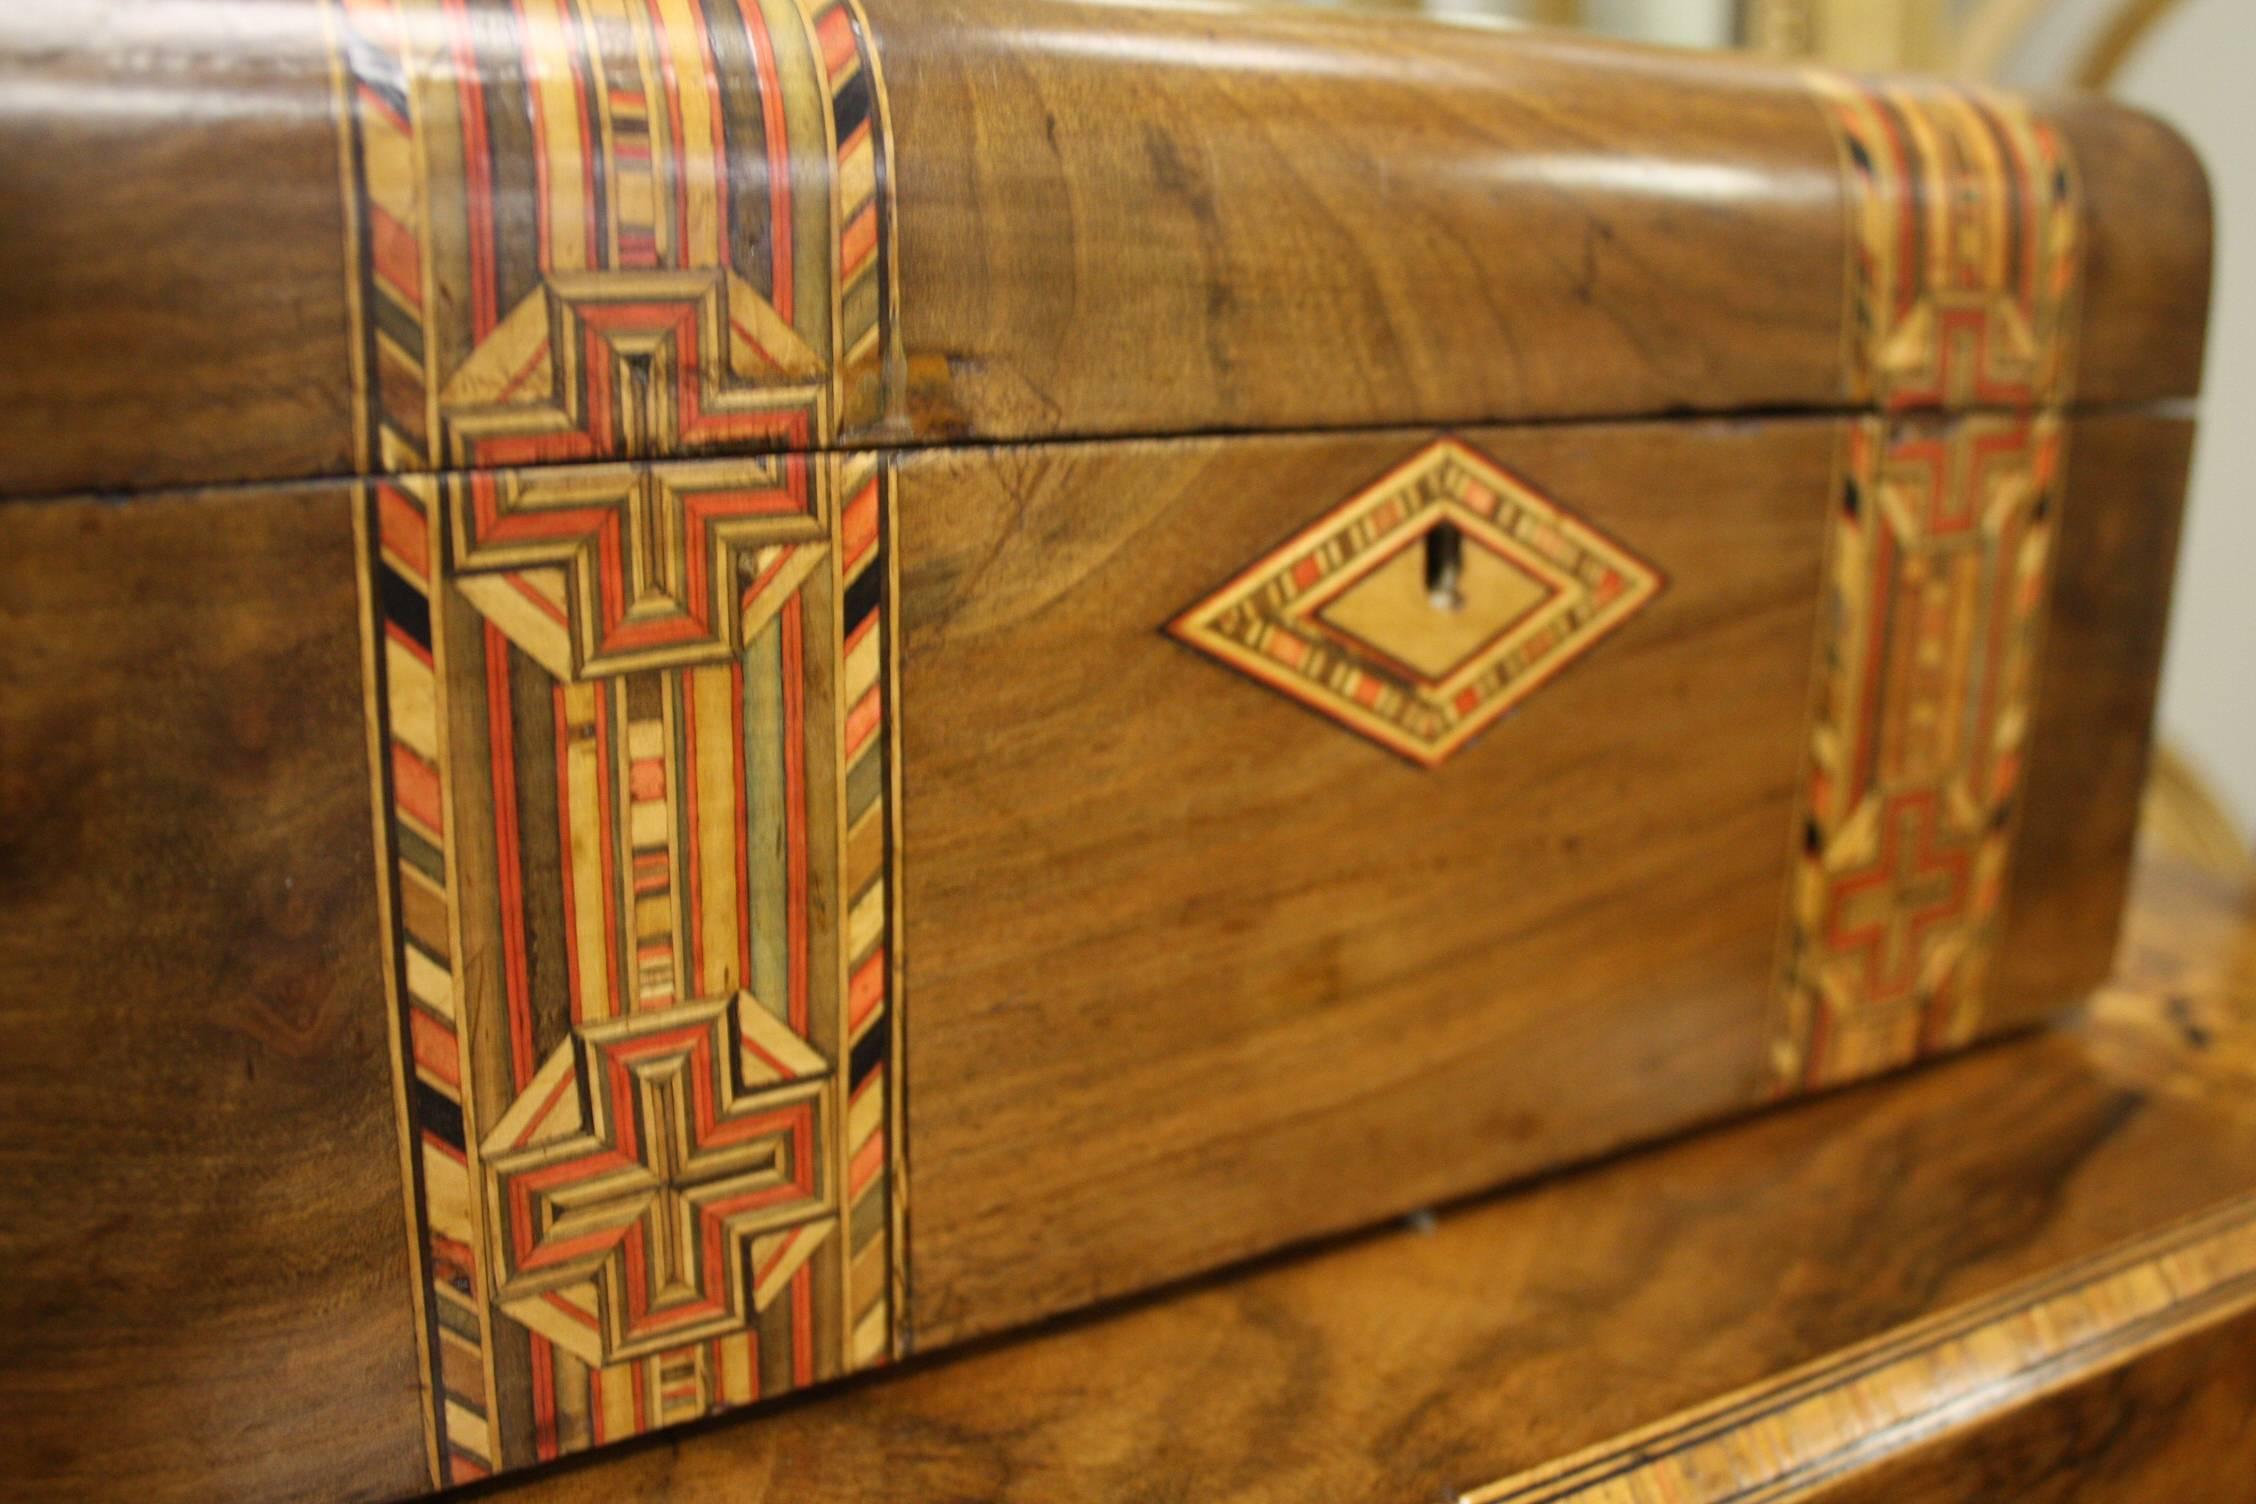 19th century English game box finely inlaid with satinwood, ebony woods.